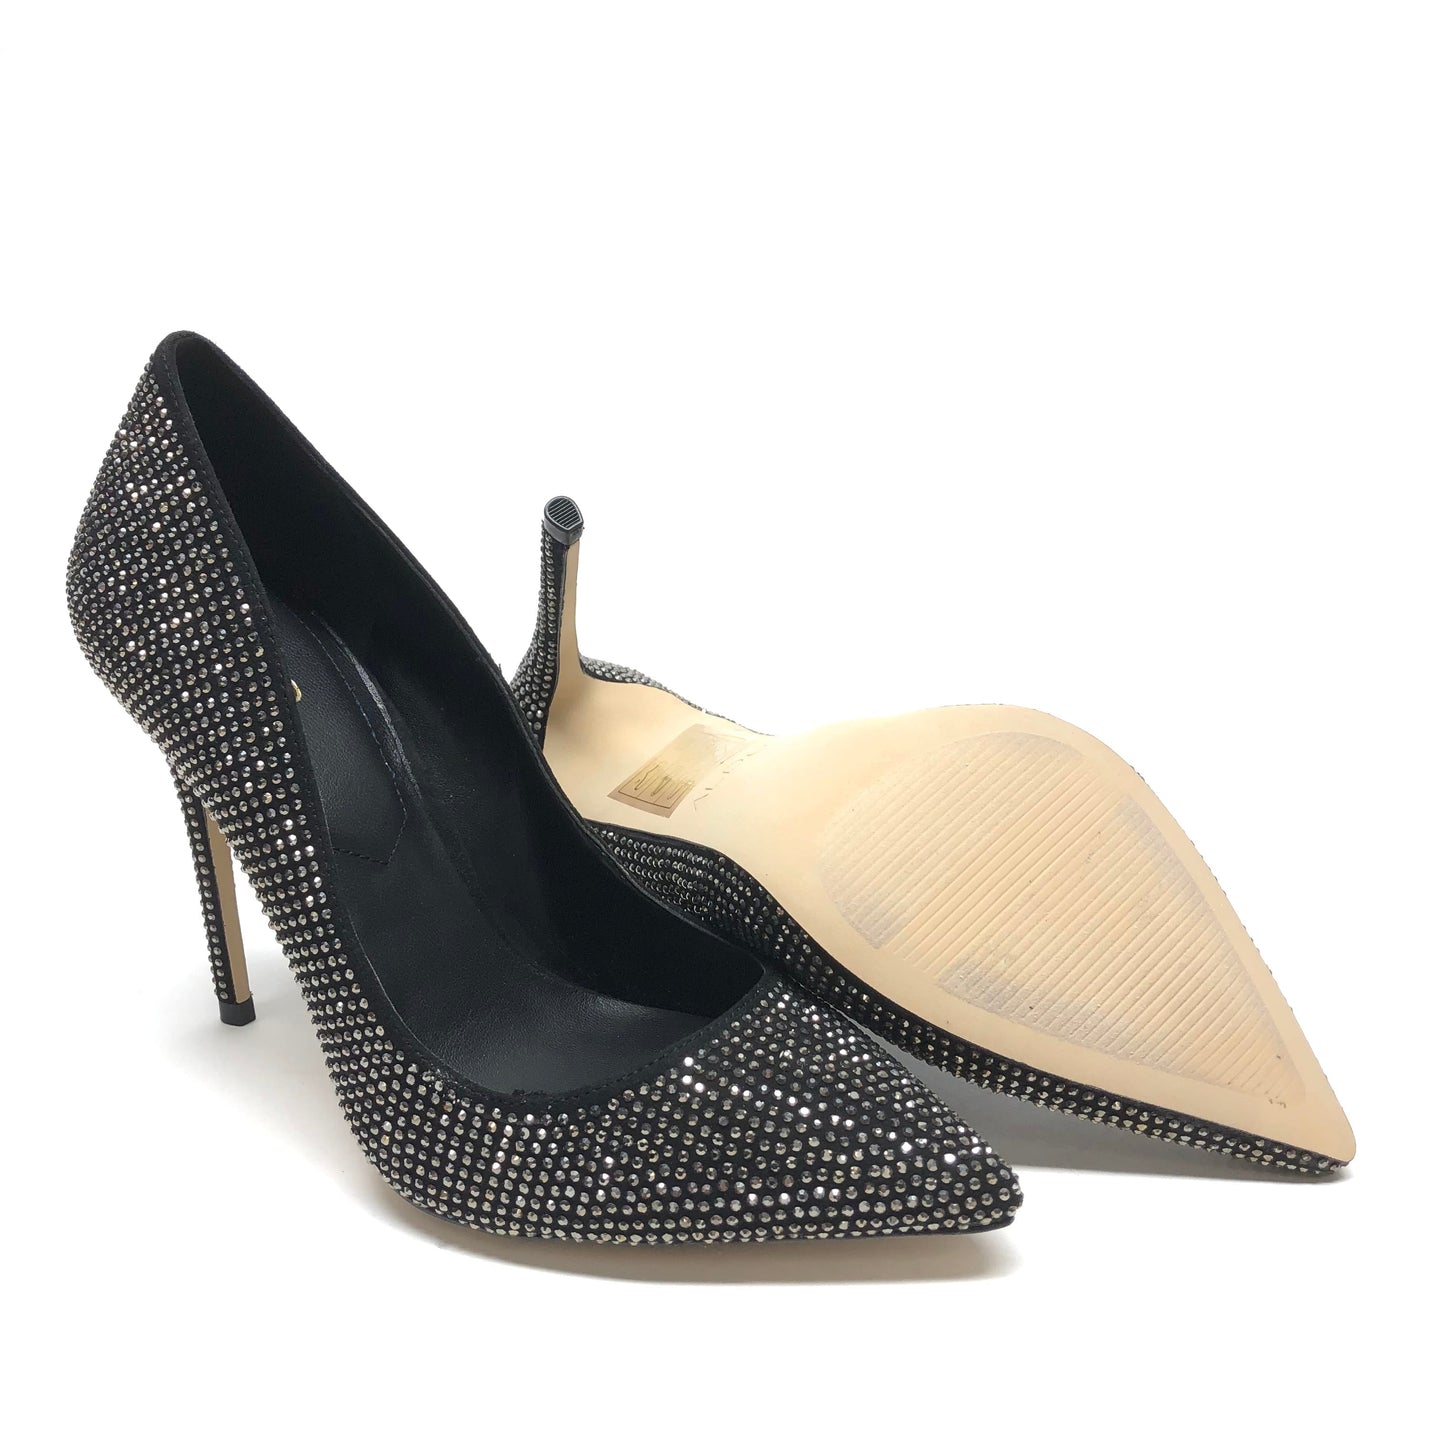 Black & Silver Shoes Heels Stiletto Aldo, Size 6